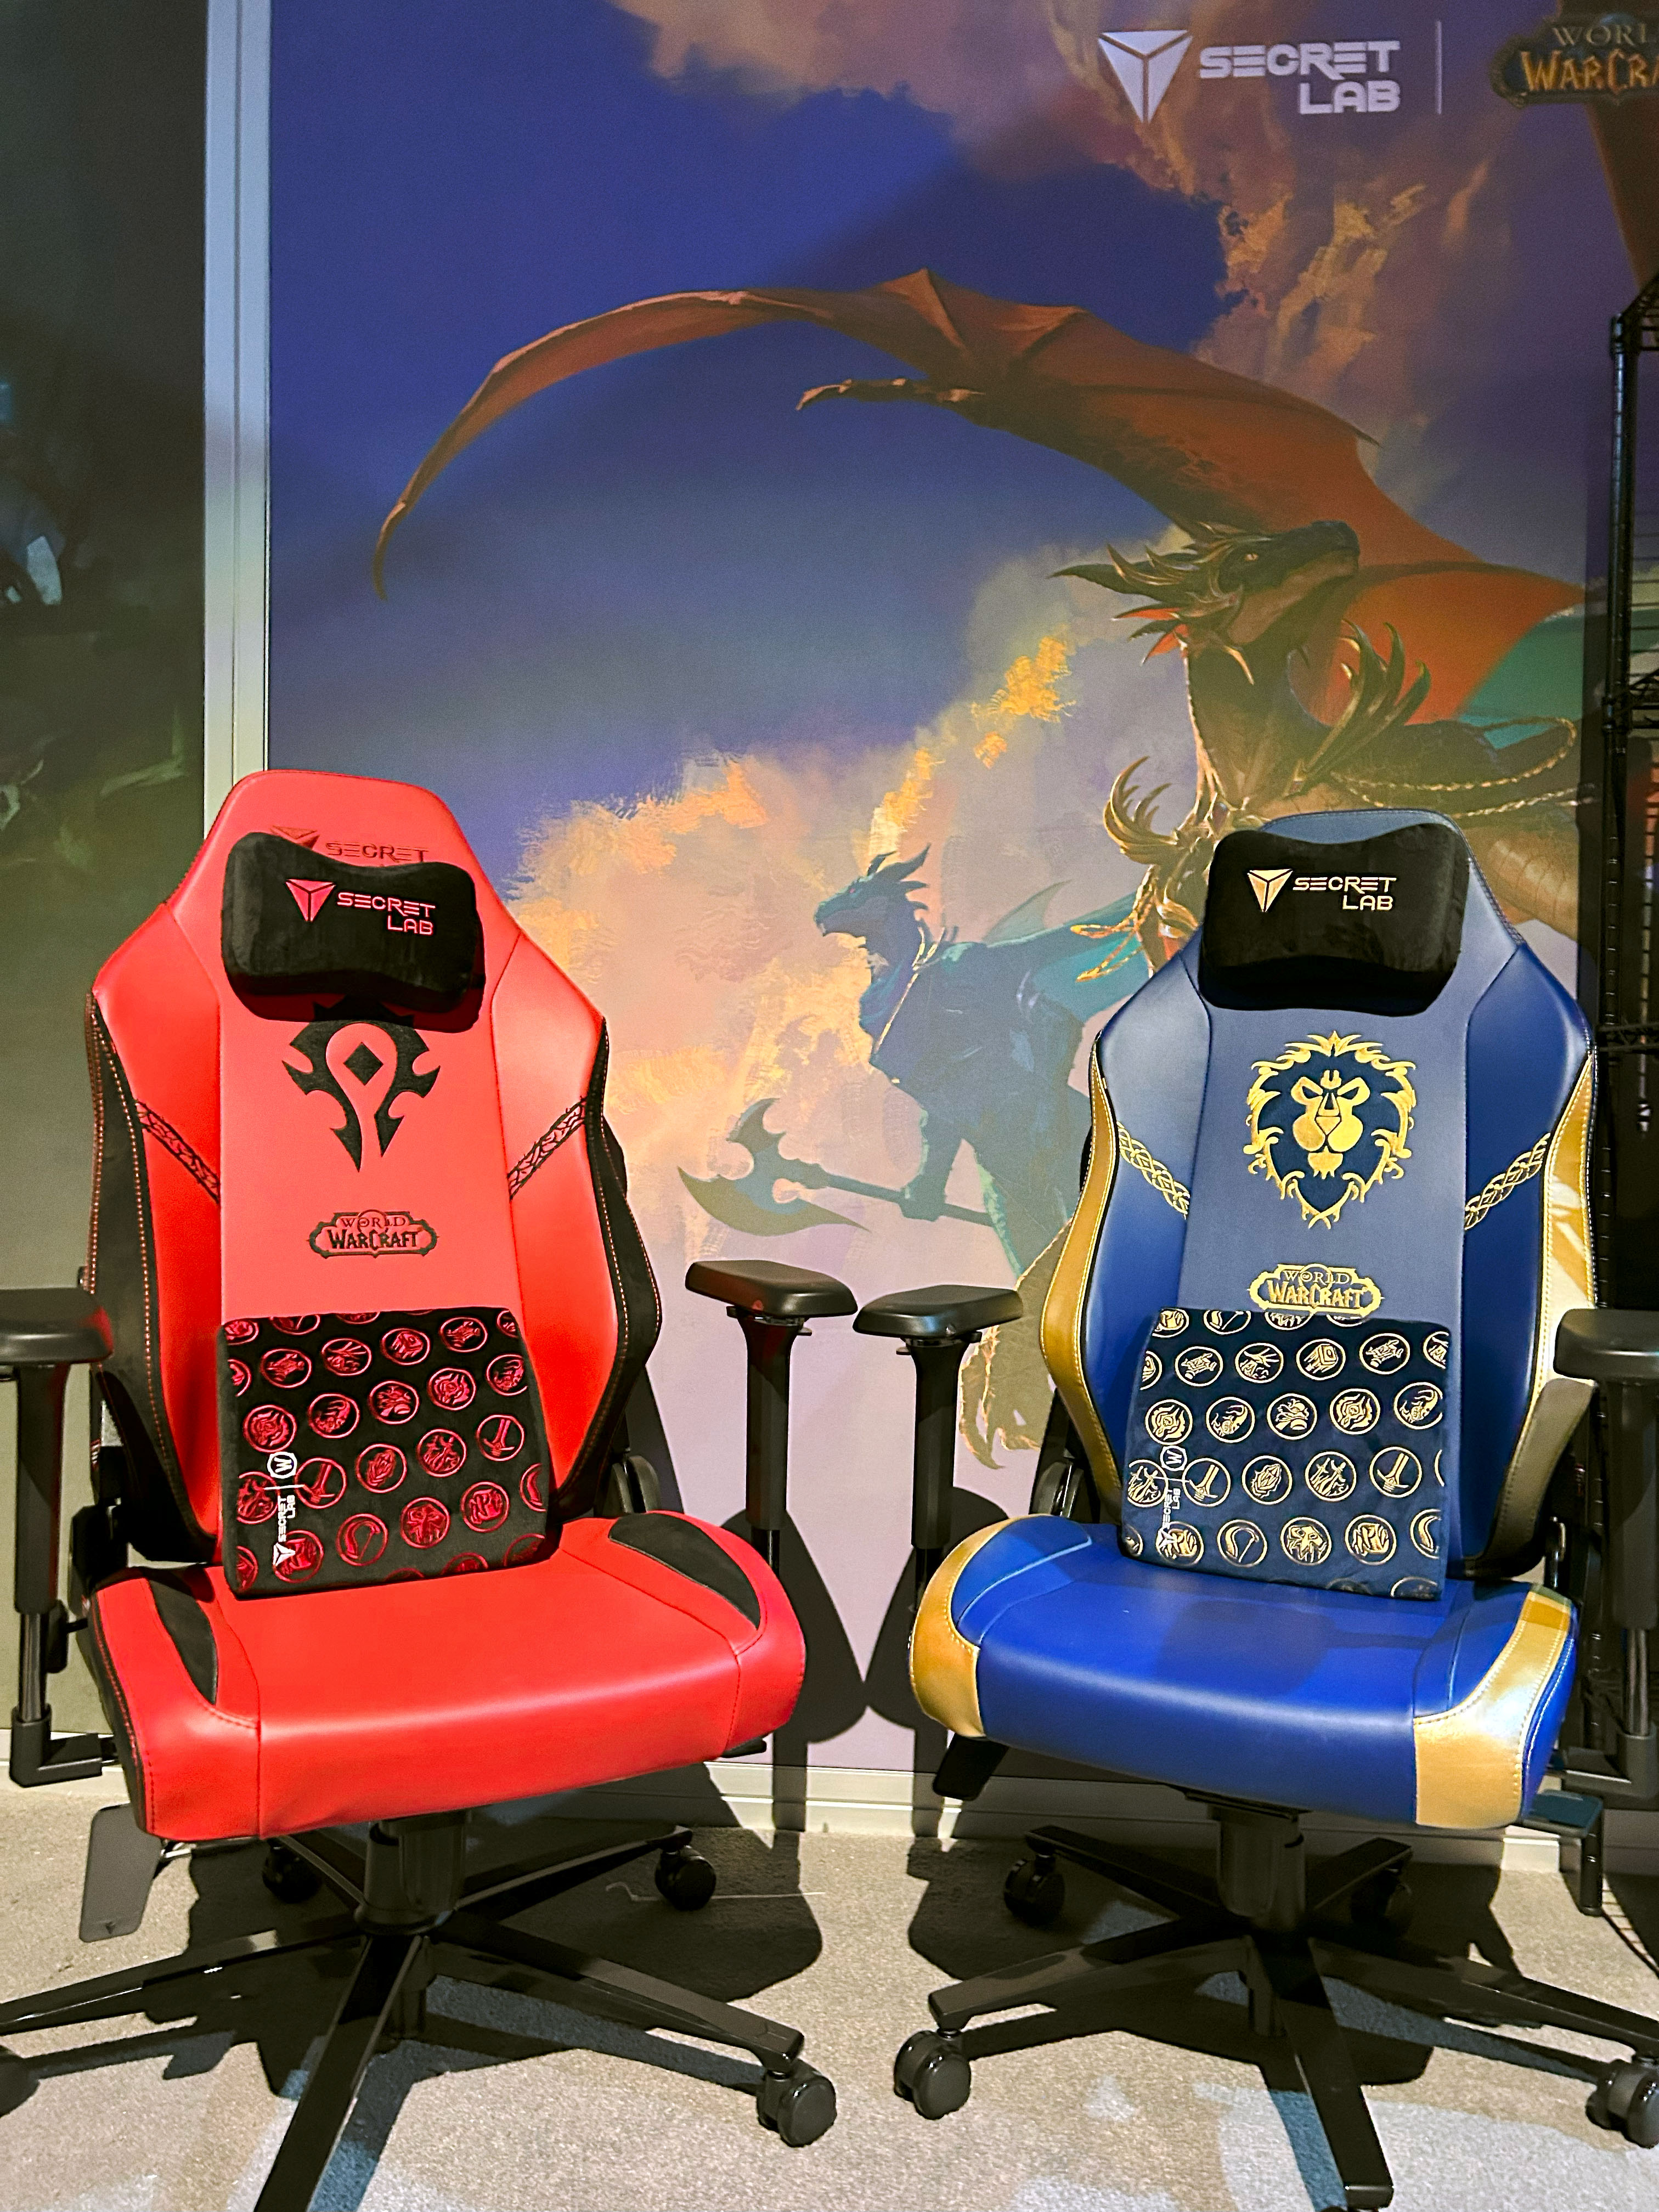 Secretlab World of Warcraft chairs